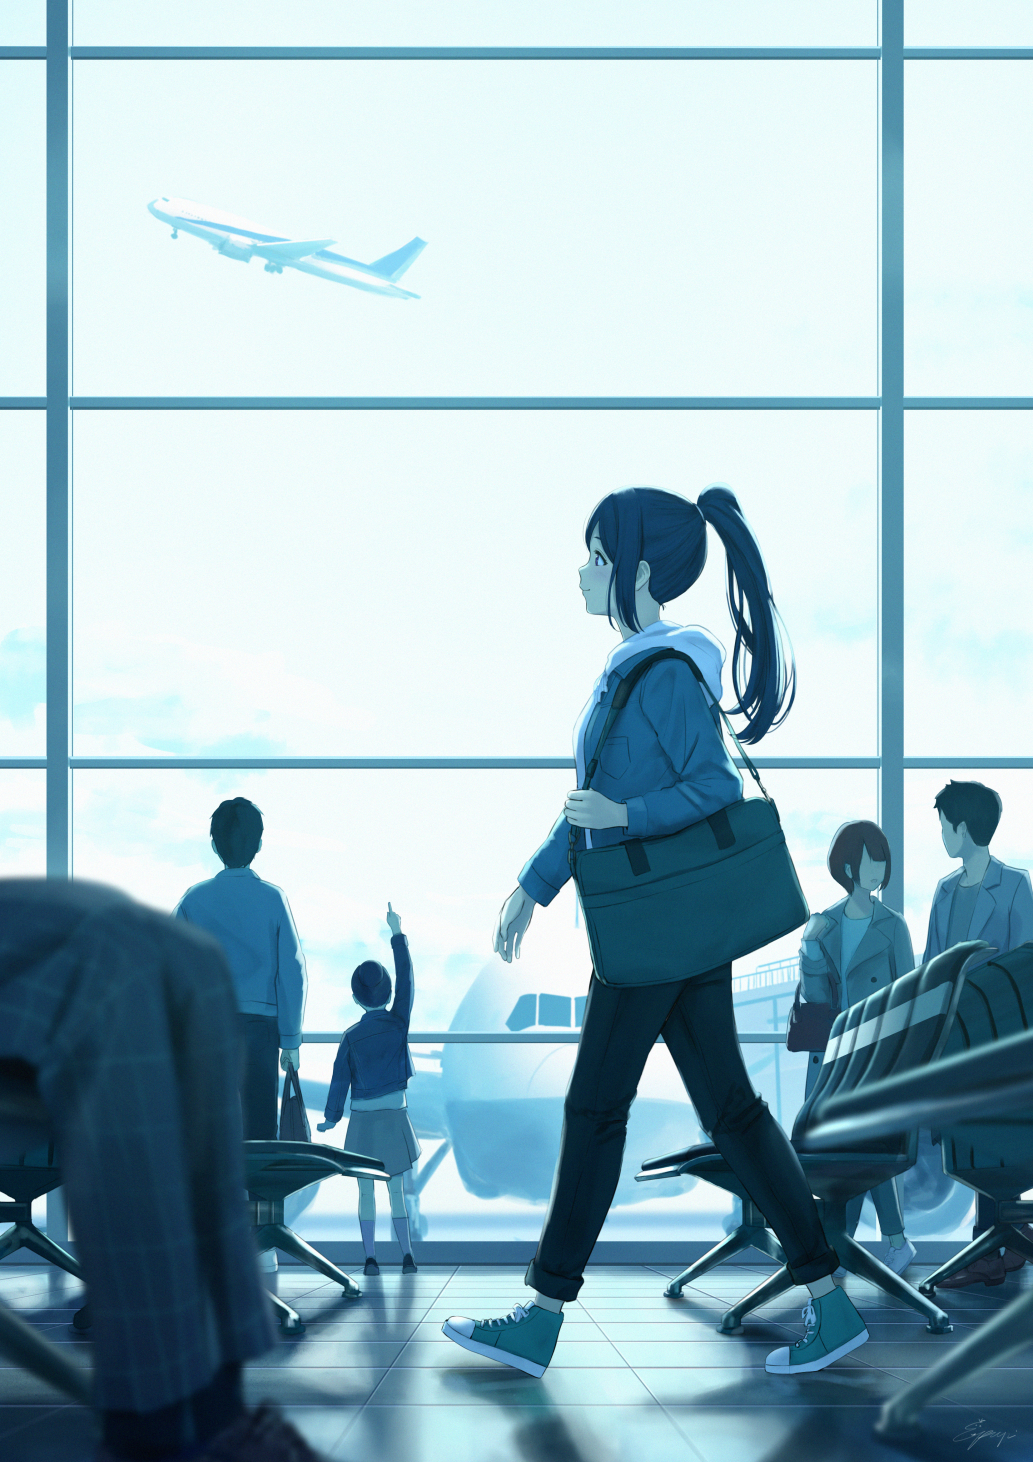 anime airport